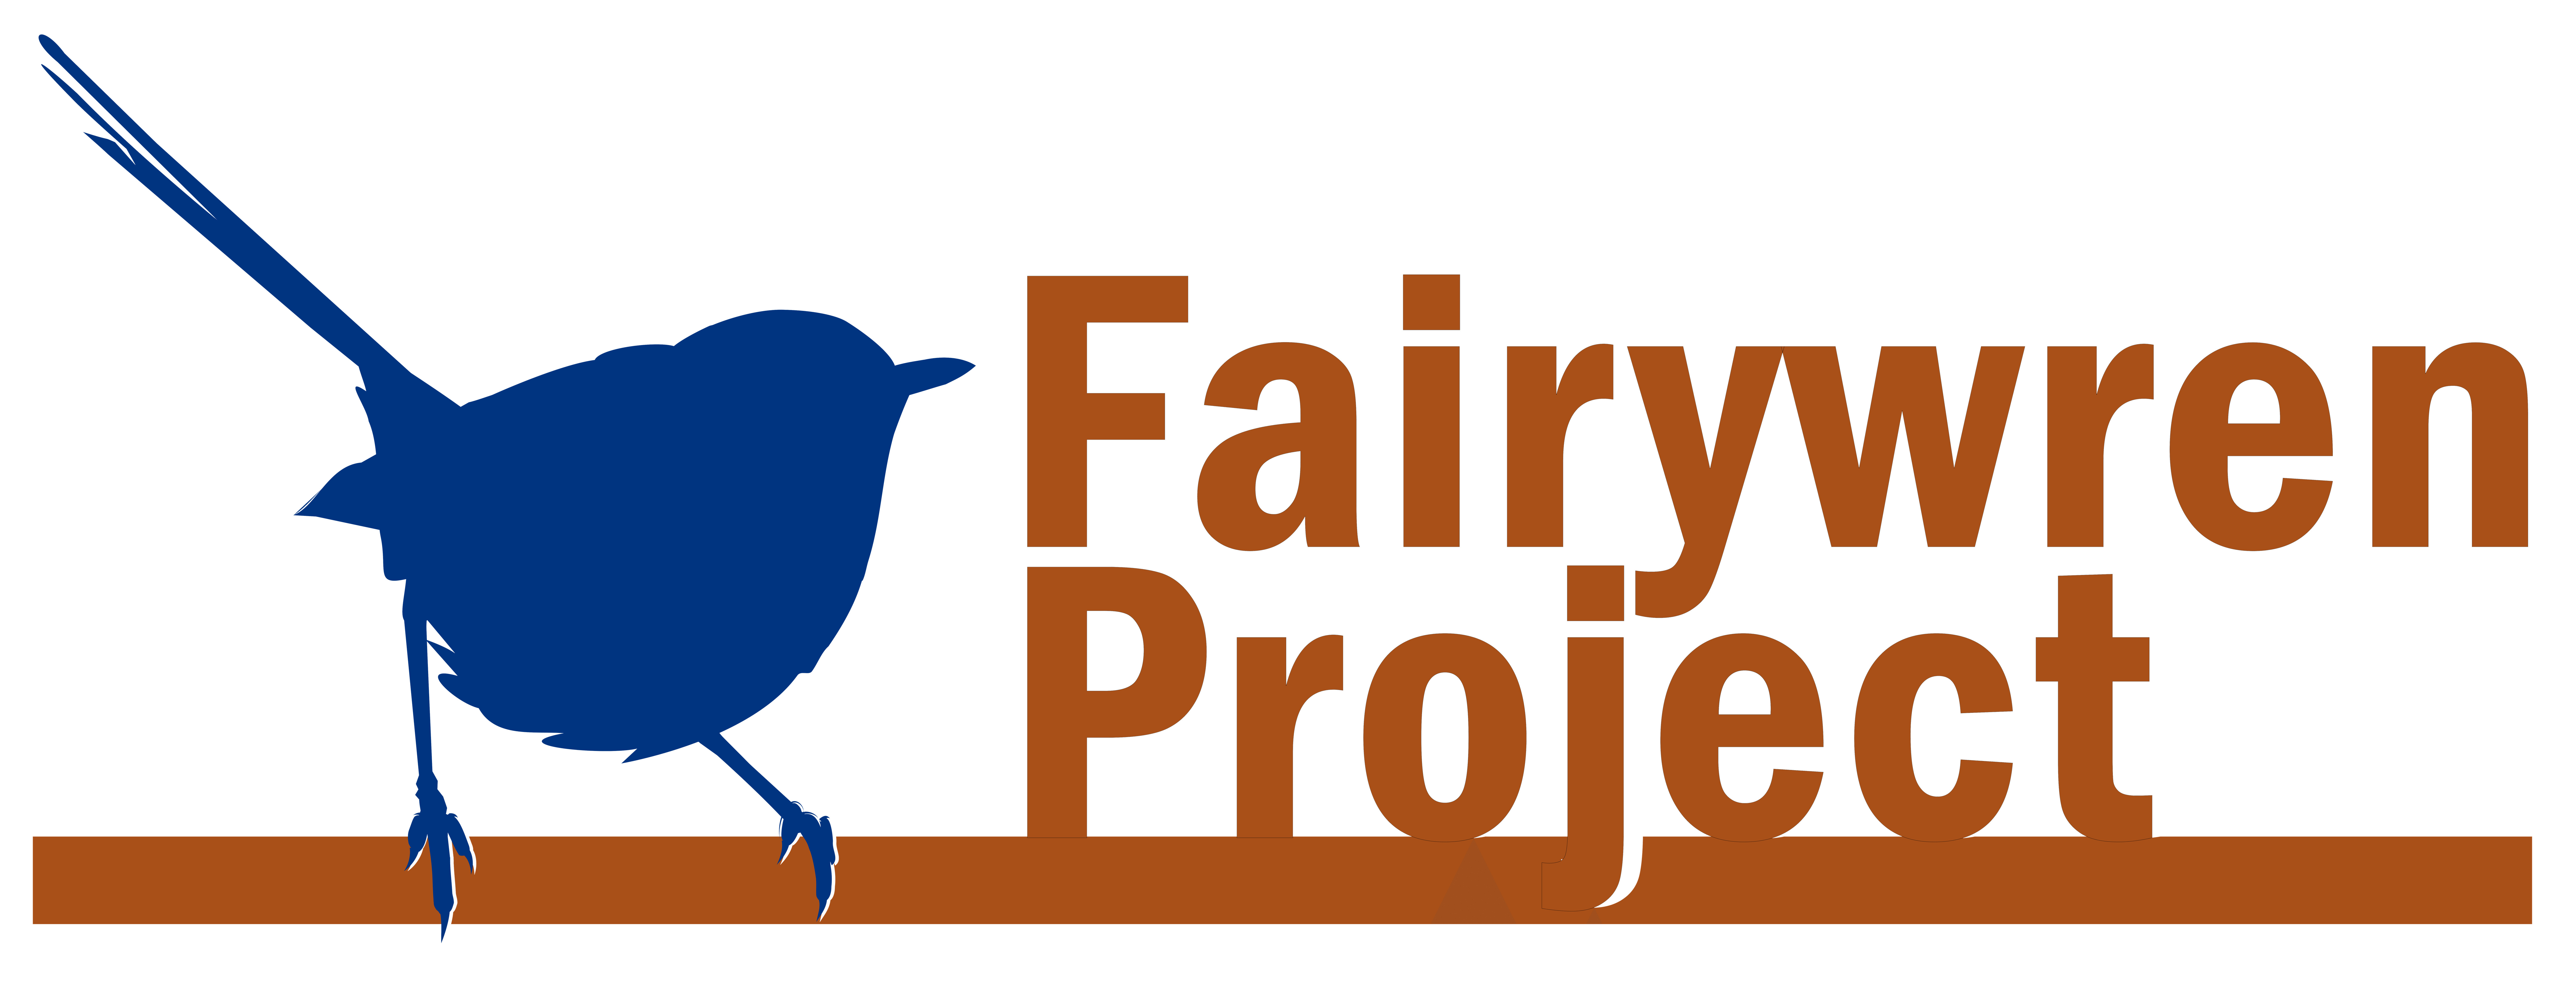 The Fairywren Project